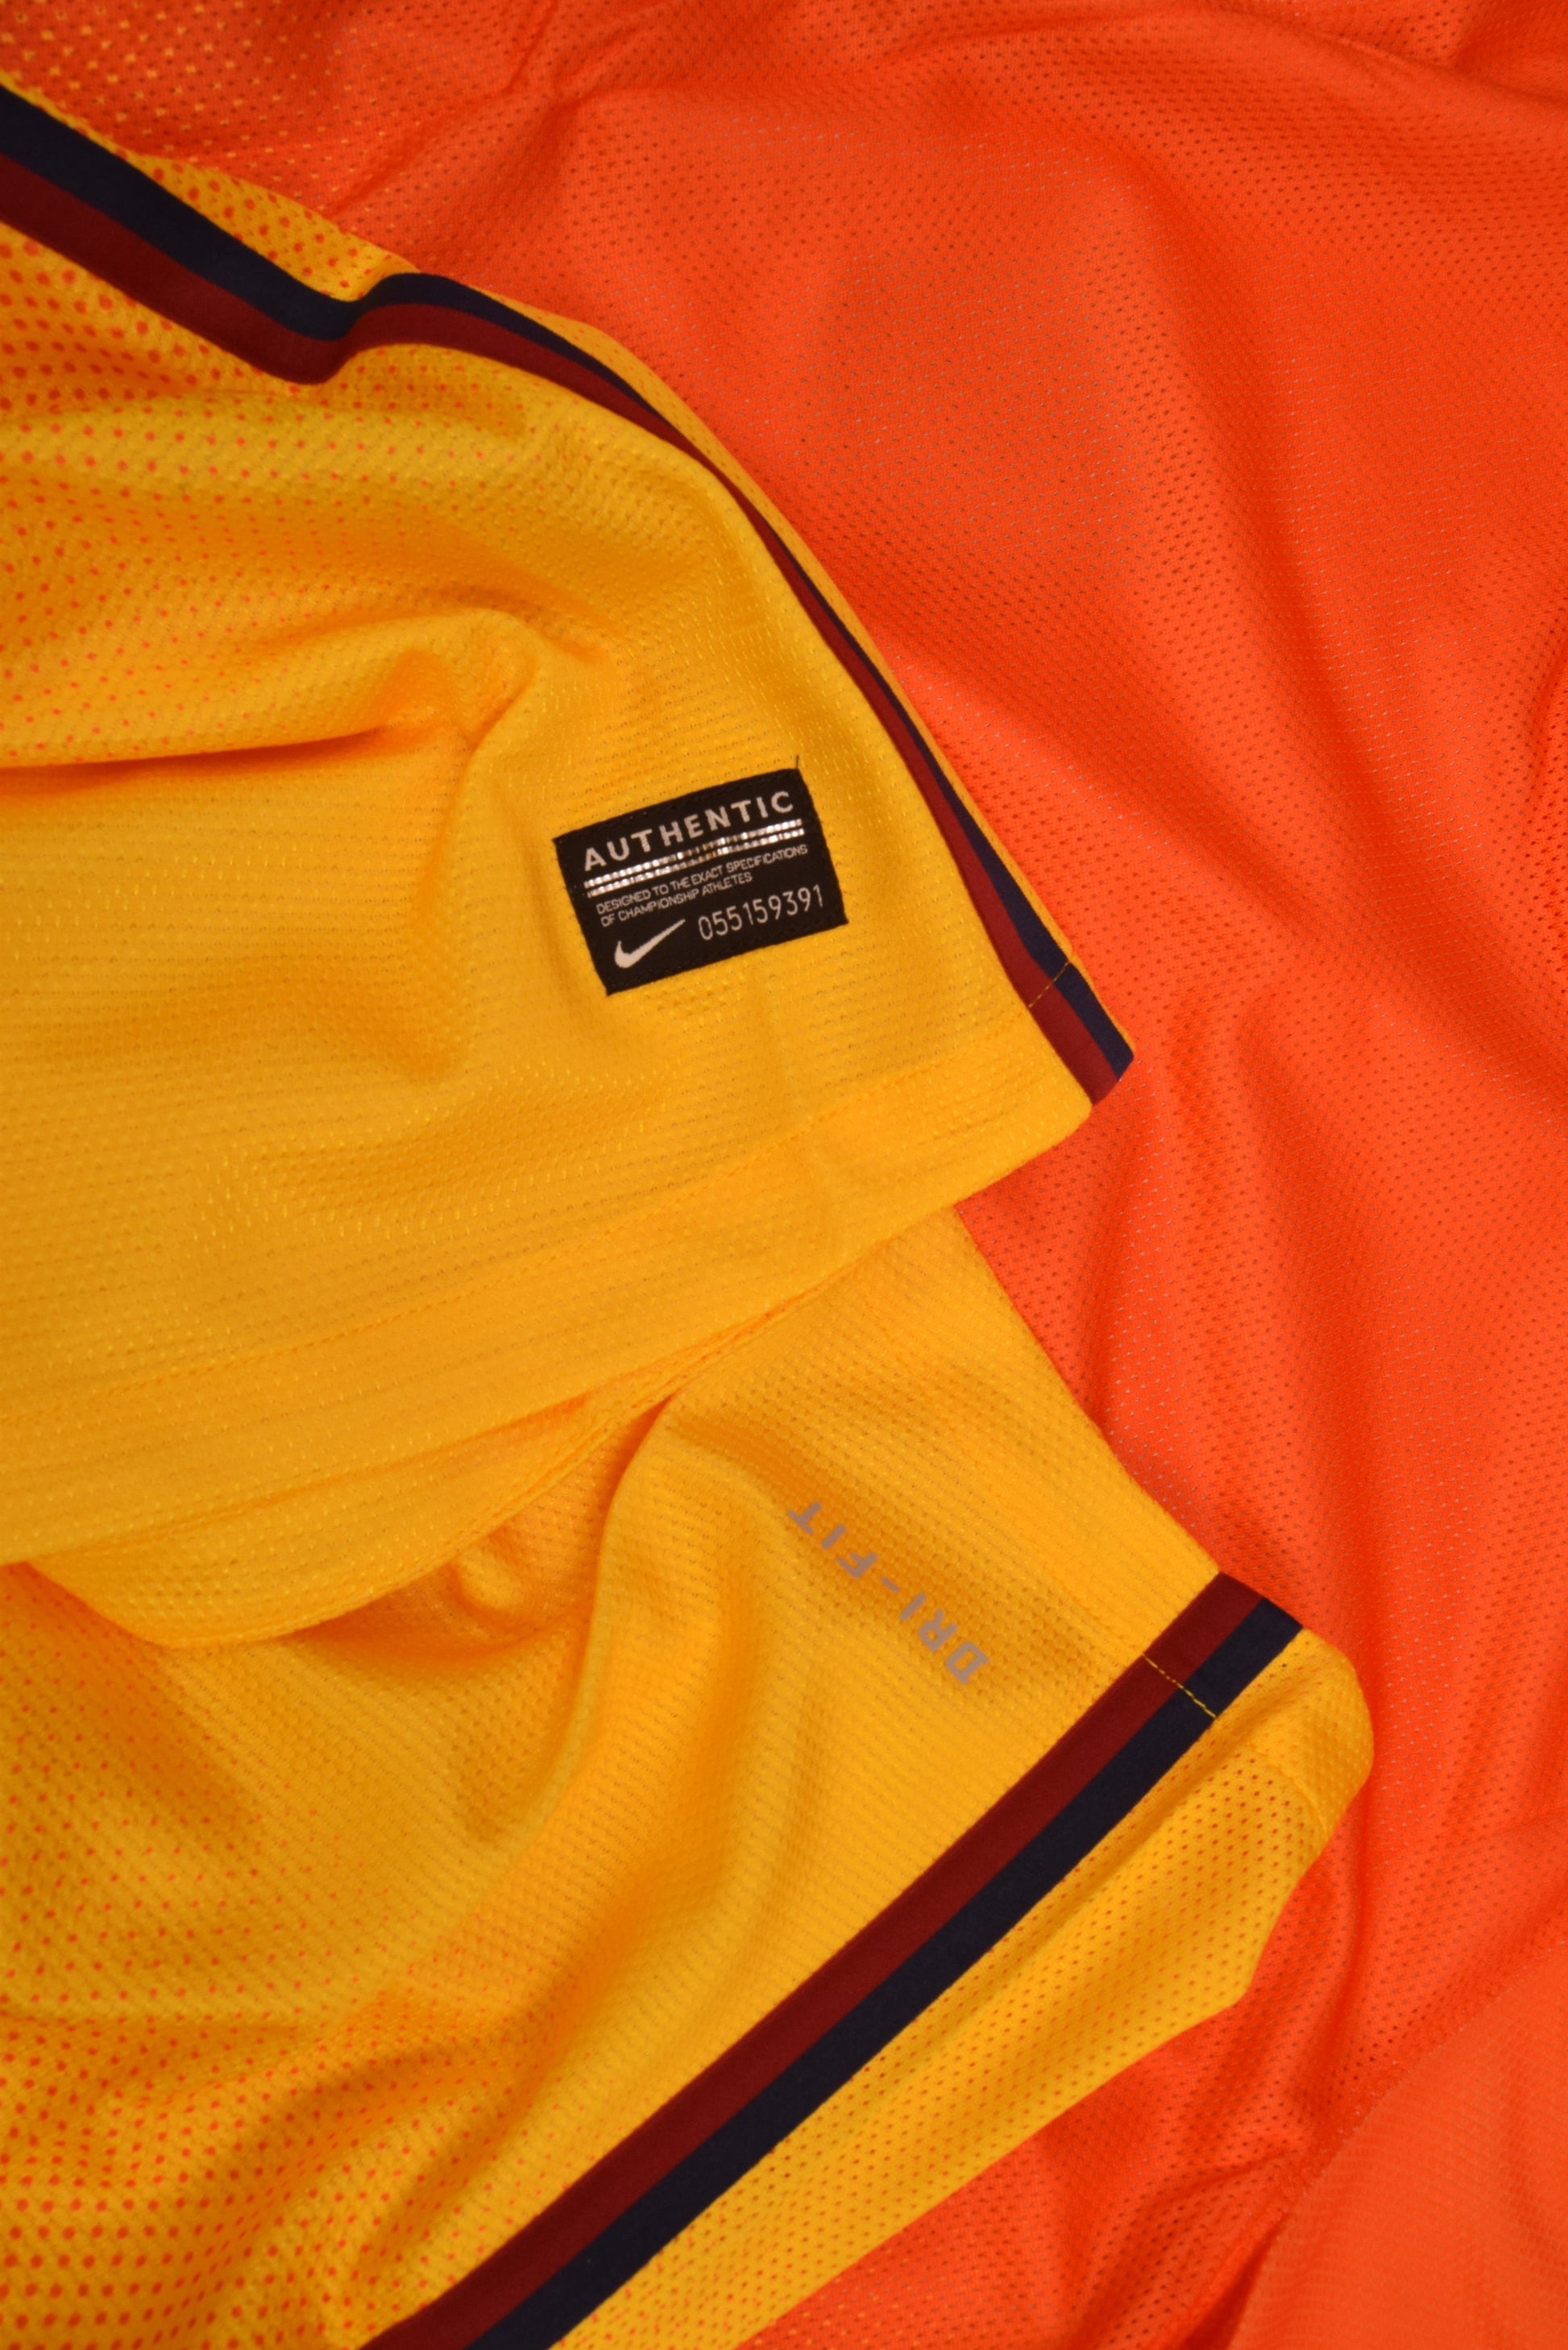 Authentic New FC Barcelona Nike DRI FIT Player Issue 2012 2013 Away Football Shirt BNWT Deadstock Qatar Foundation Orange Yellow Size M